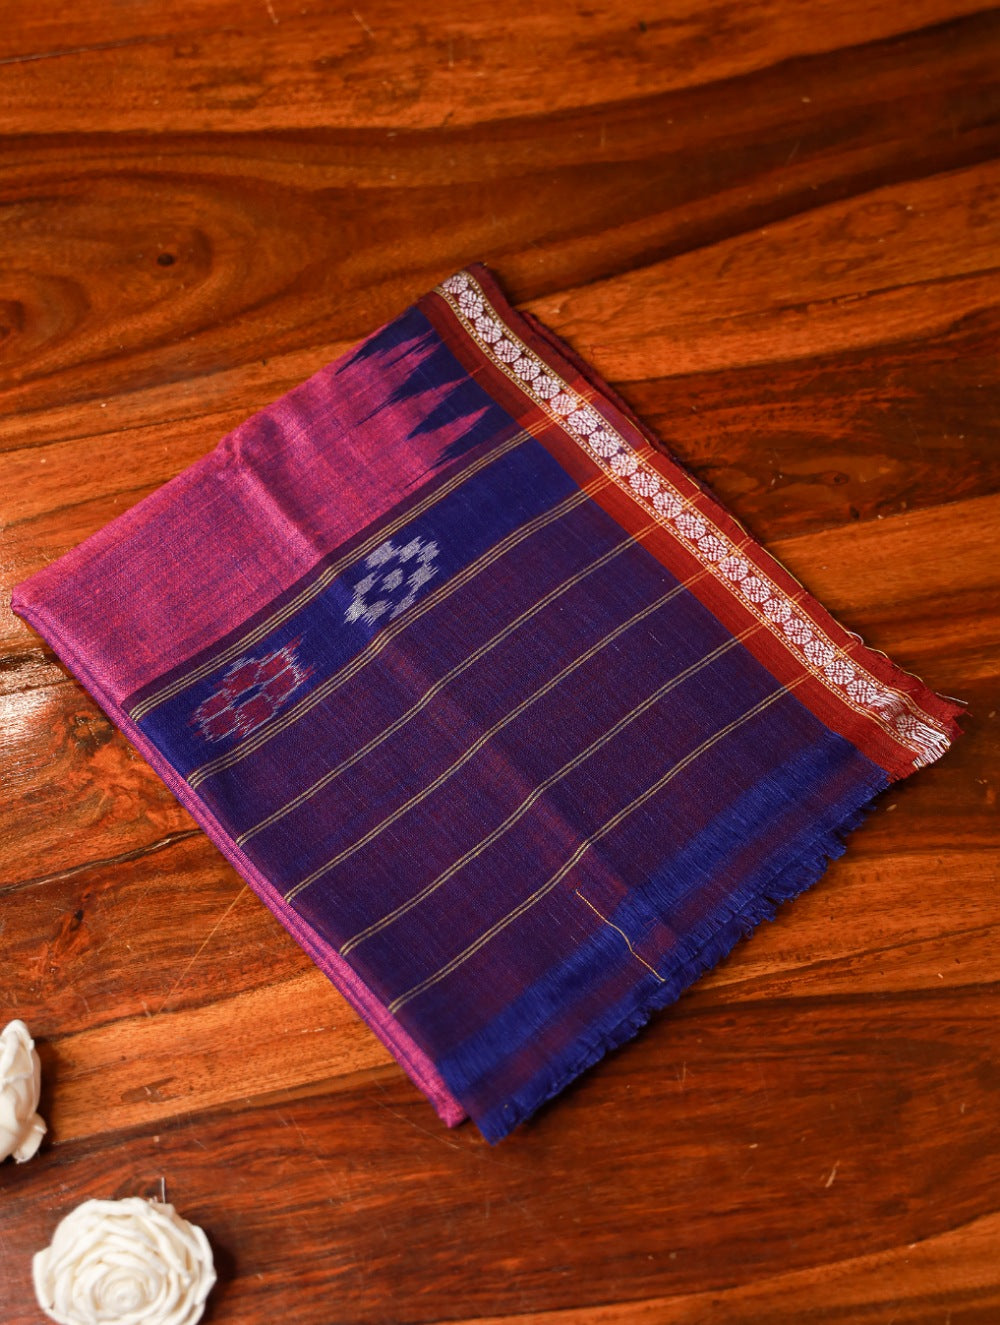 Load image into Gallery viewer, Sambalpuri Handwoven Ikat Gamcha / Cotton Towel - Pink